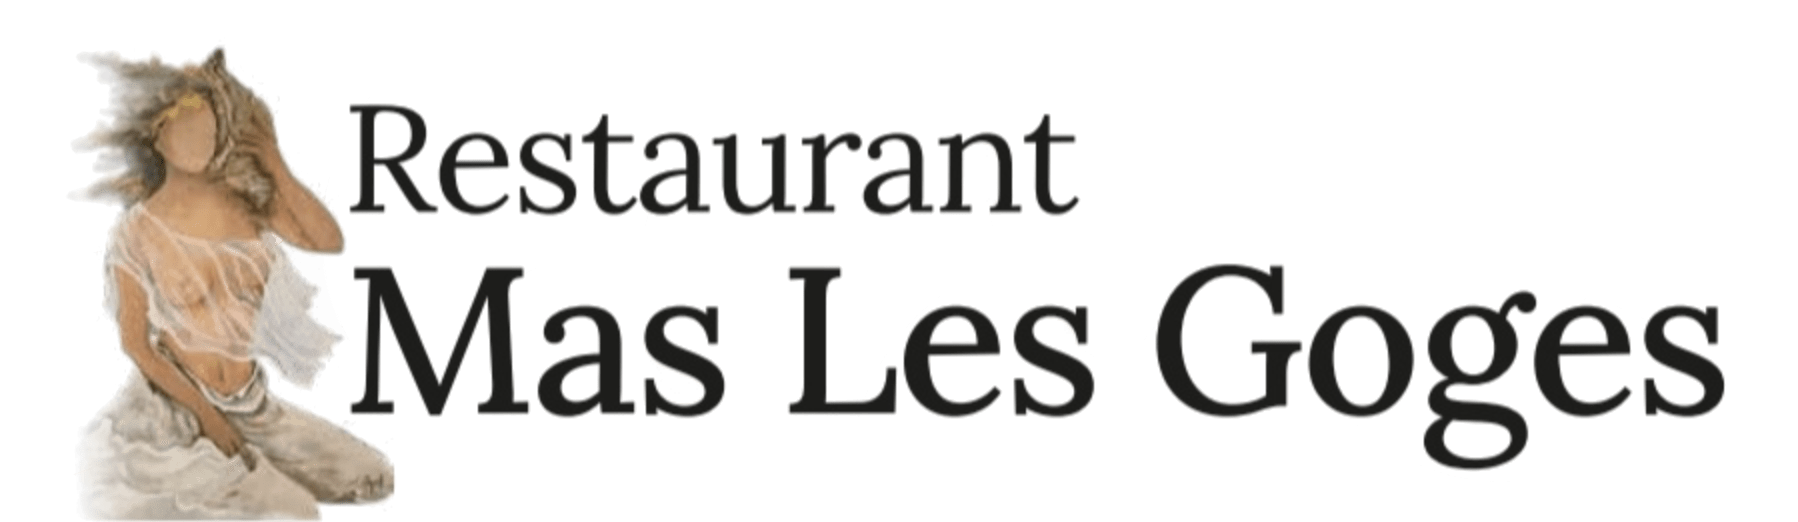 Mas Les Goges | Masia Restaurant